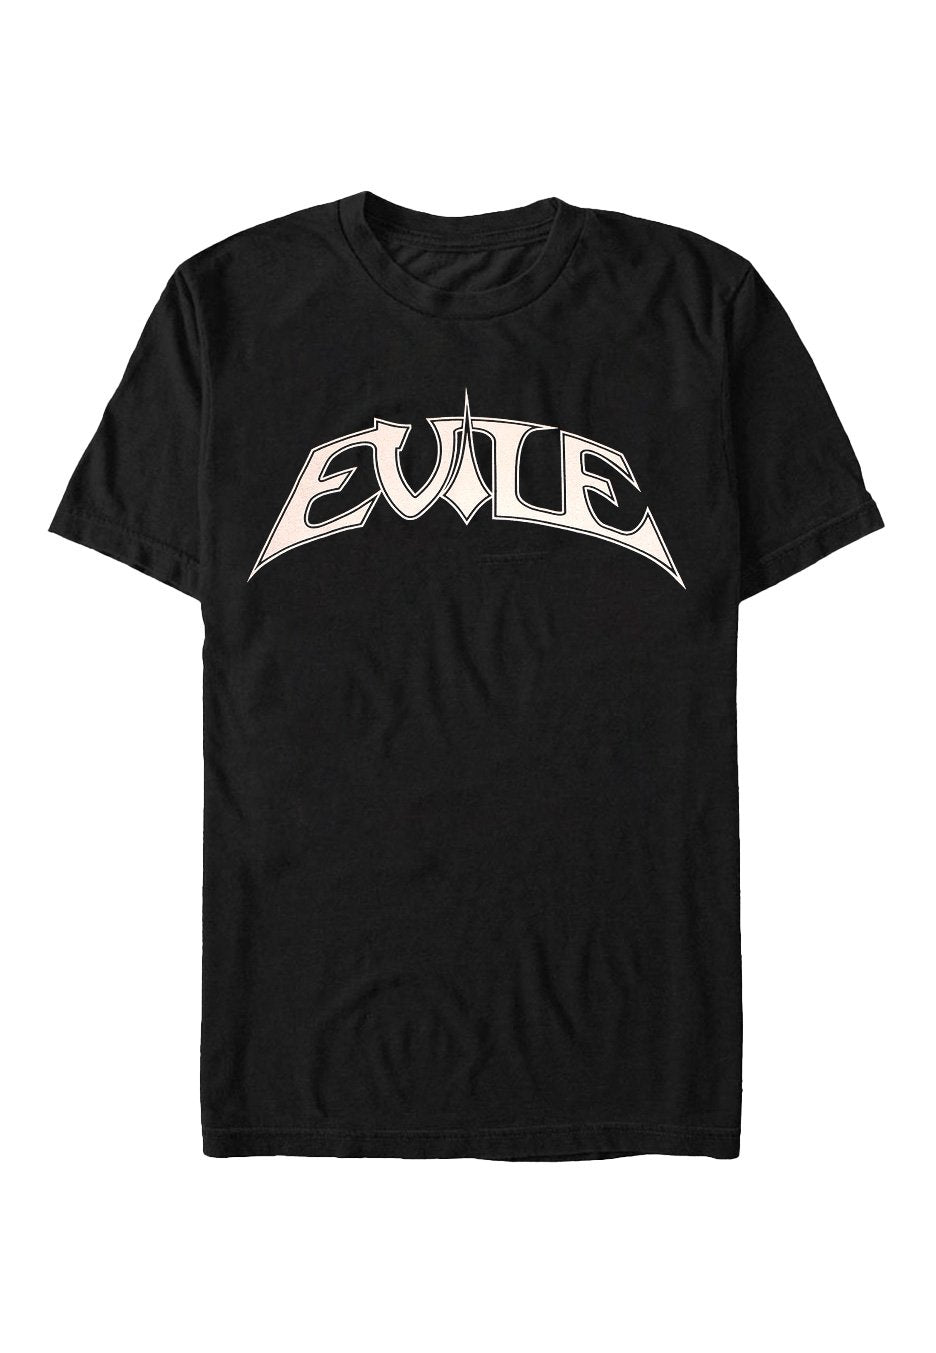 Evile - Logo Black/White - T-Shirt